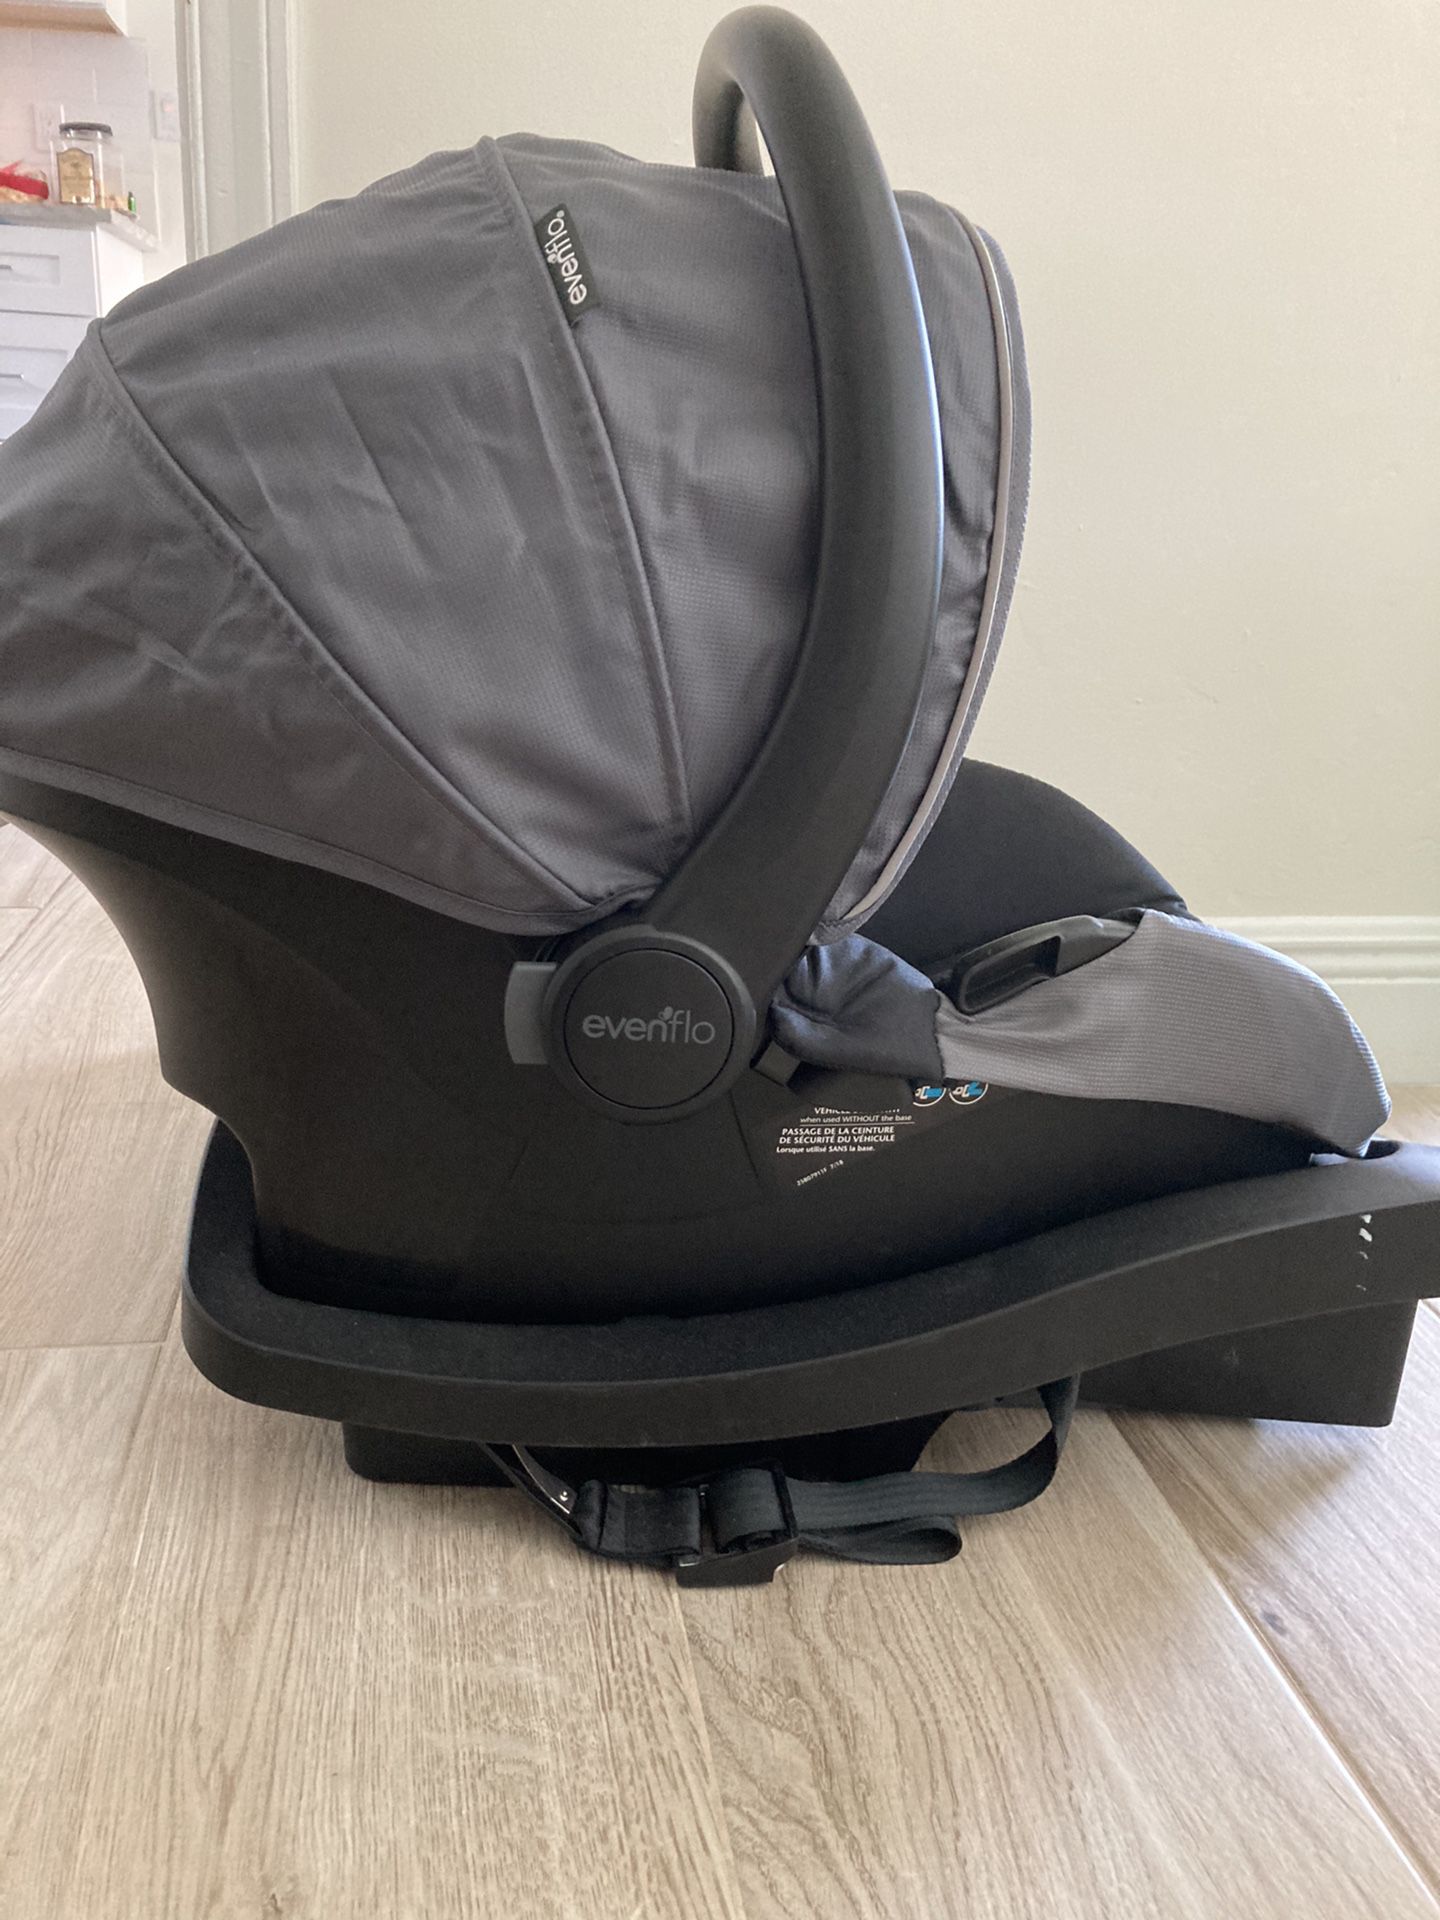 EvenFlo Baby Car Seat